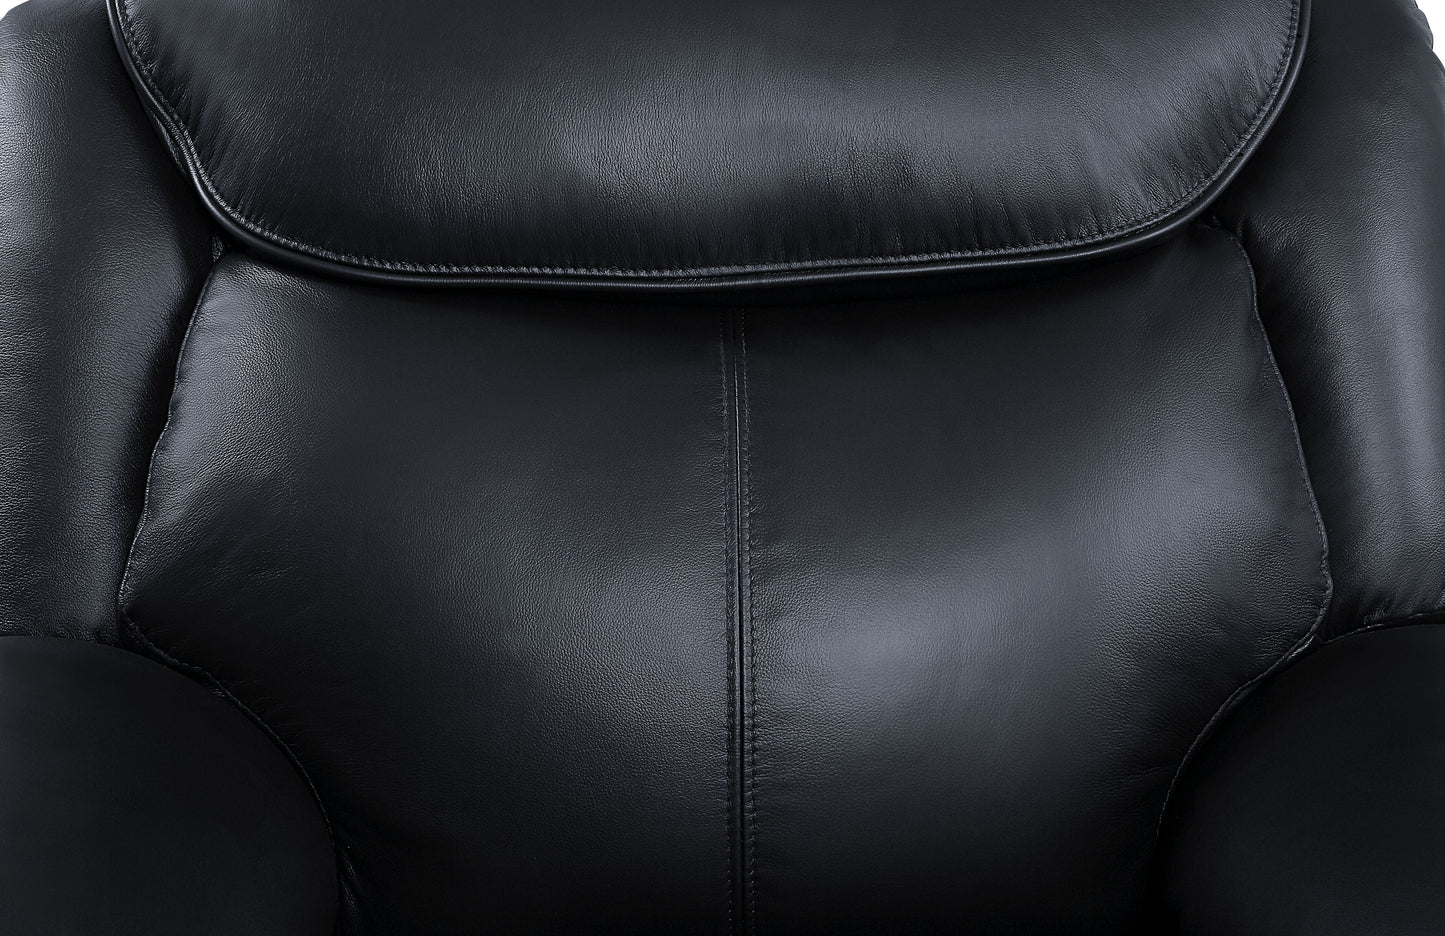 Ralorel - Sofa - Black Top Grain Leather